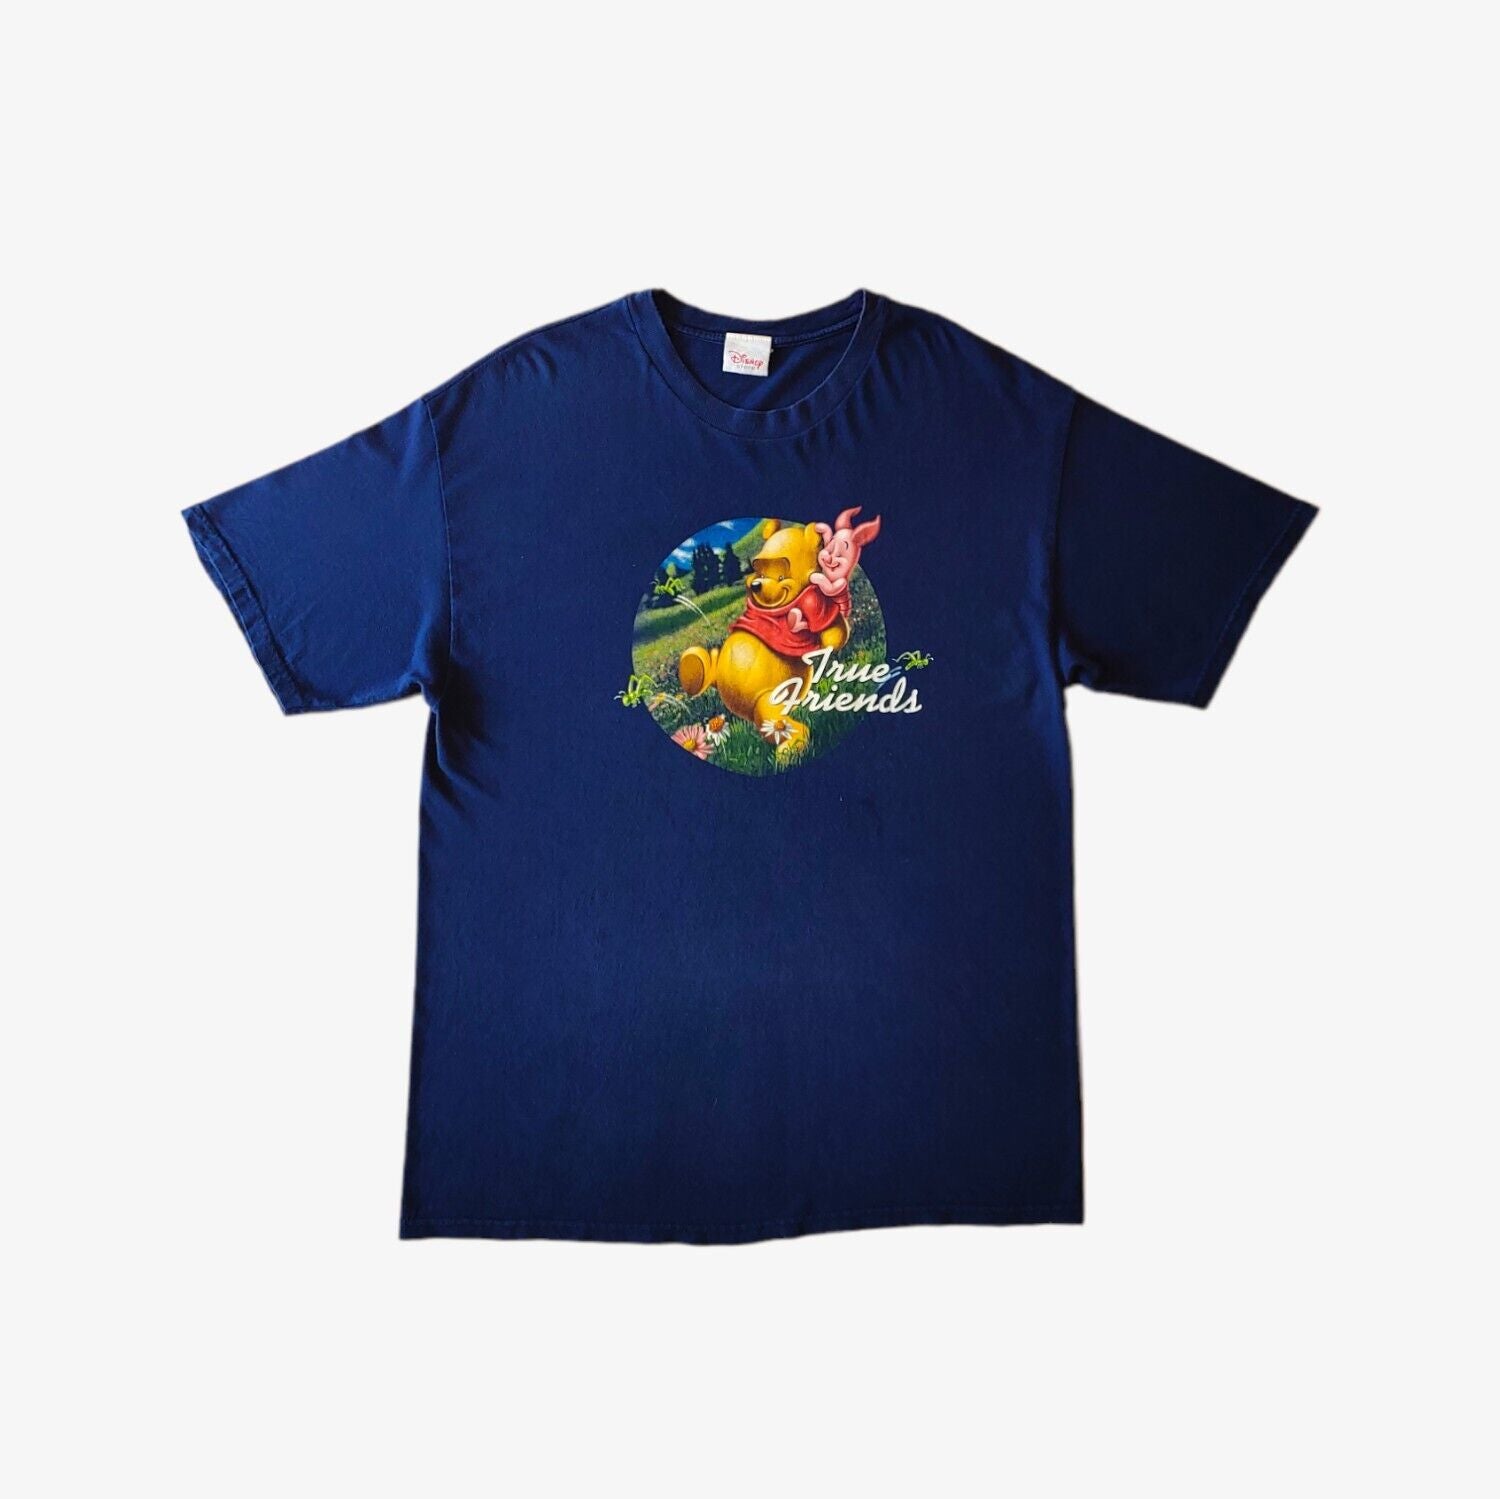 Vintage 90s Disney Winnie The Pooh Friends Graphic Print Top T-Shirt - Casspios Dream